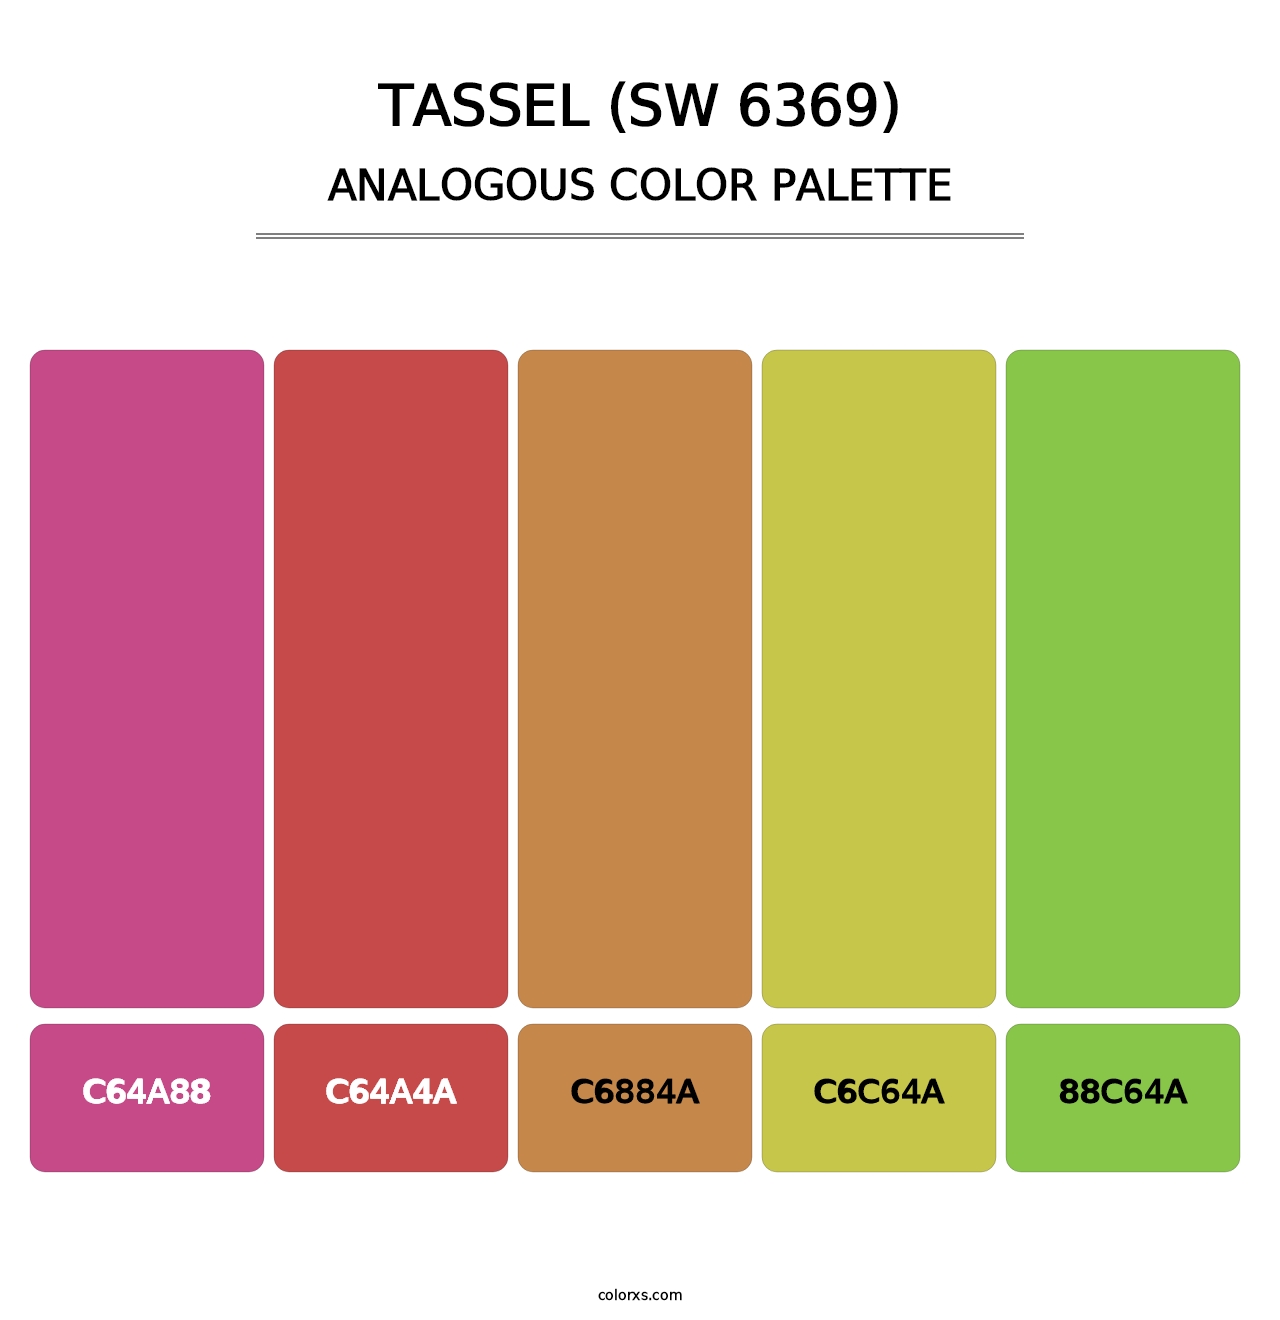 Tassel (SW 6369) - Analogous Color Palette